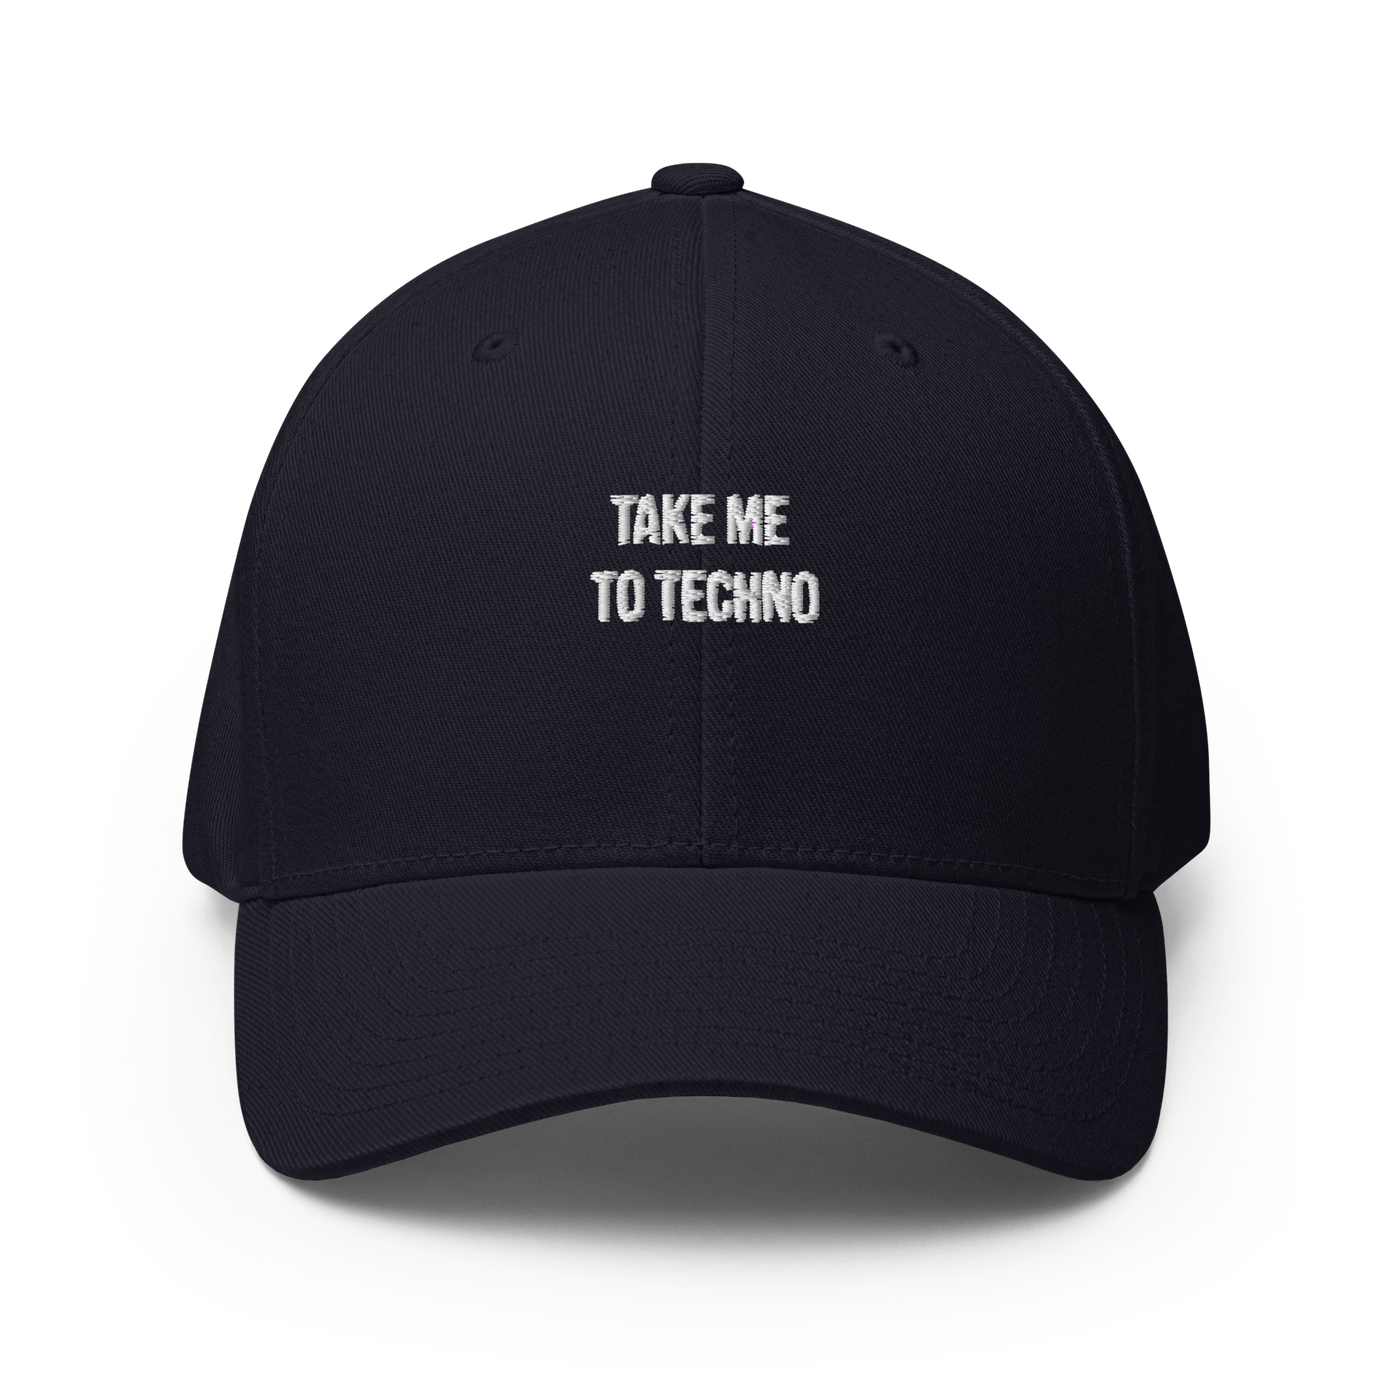 Take me to techno Flexfit Cap - Khaki - S/M - Just Another Cap Store